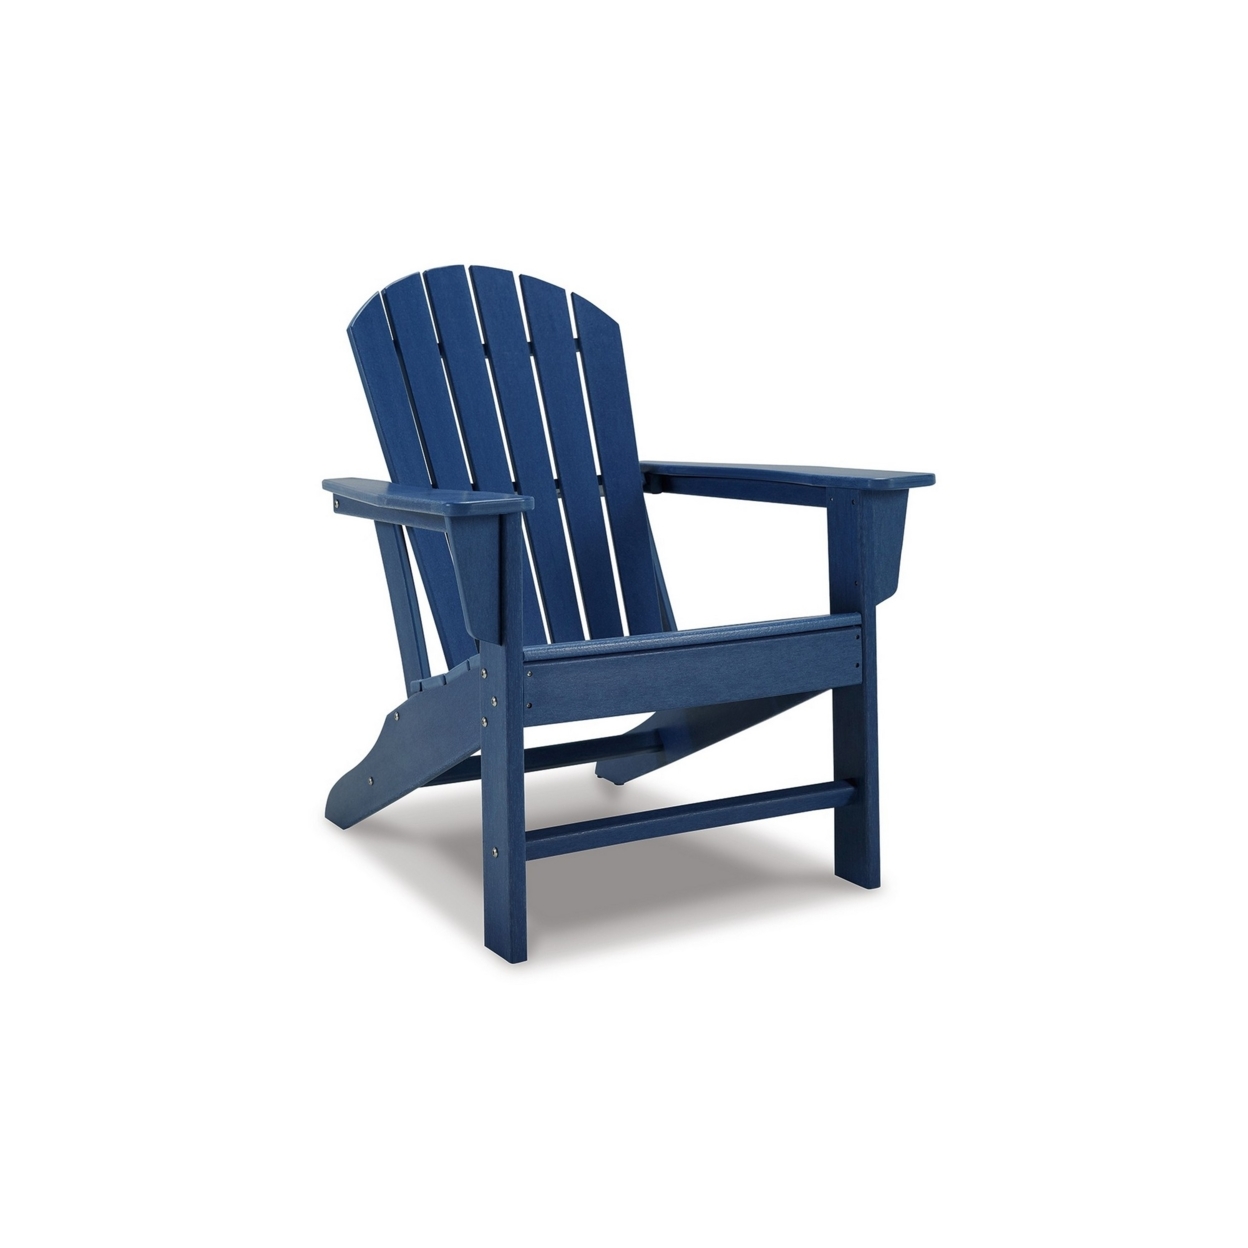 Quiz 32 Inch Outdoor Adirondack Chair, Slatted Backrest, Blue HDPE Frame